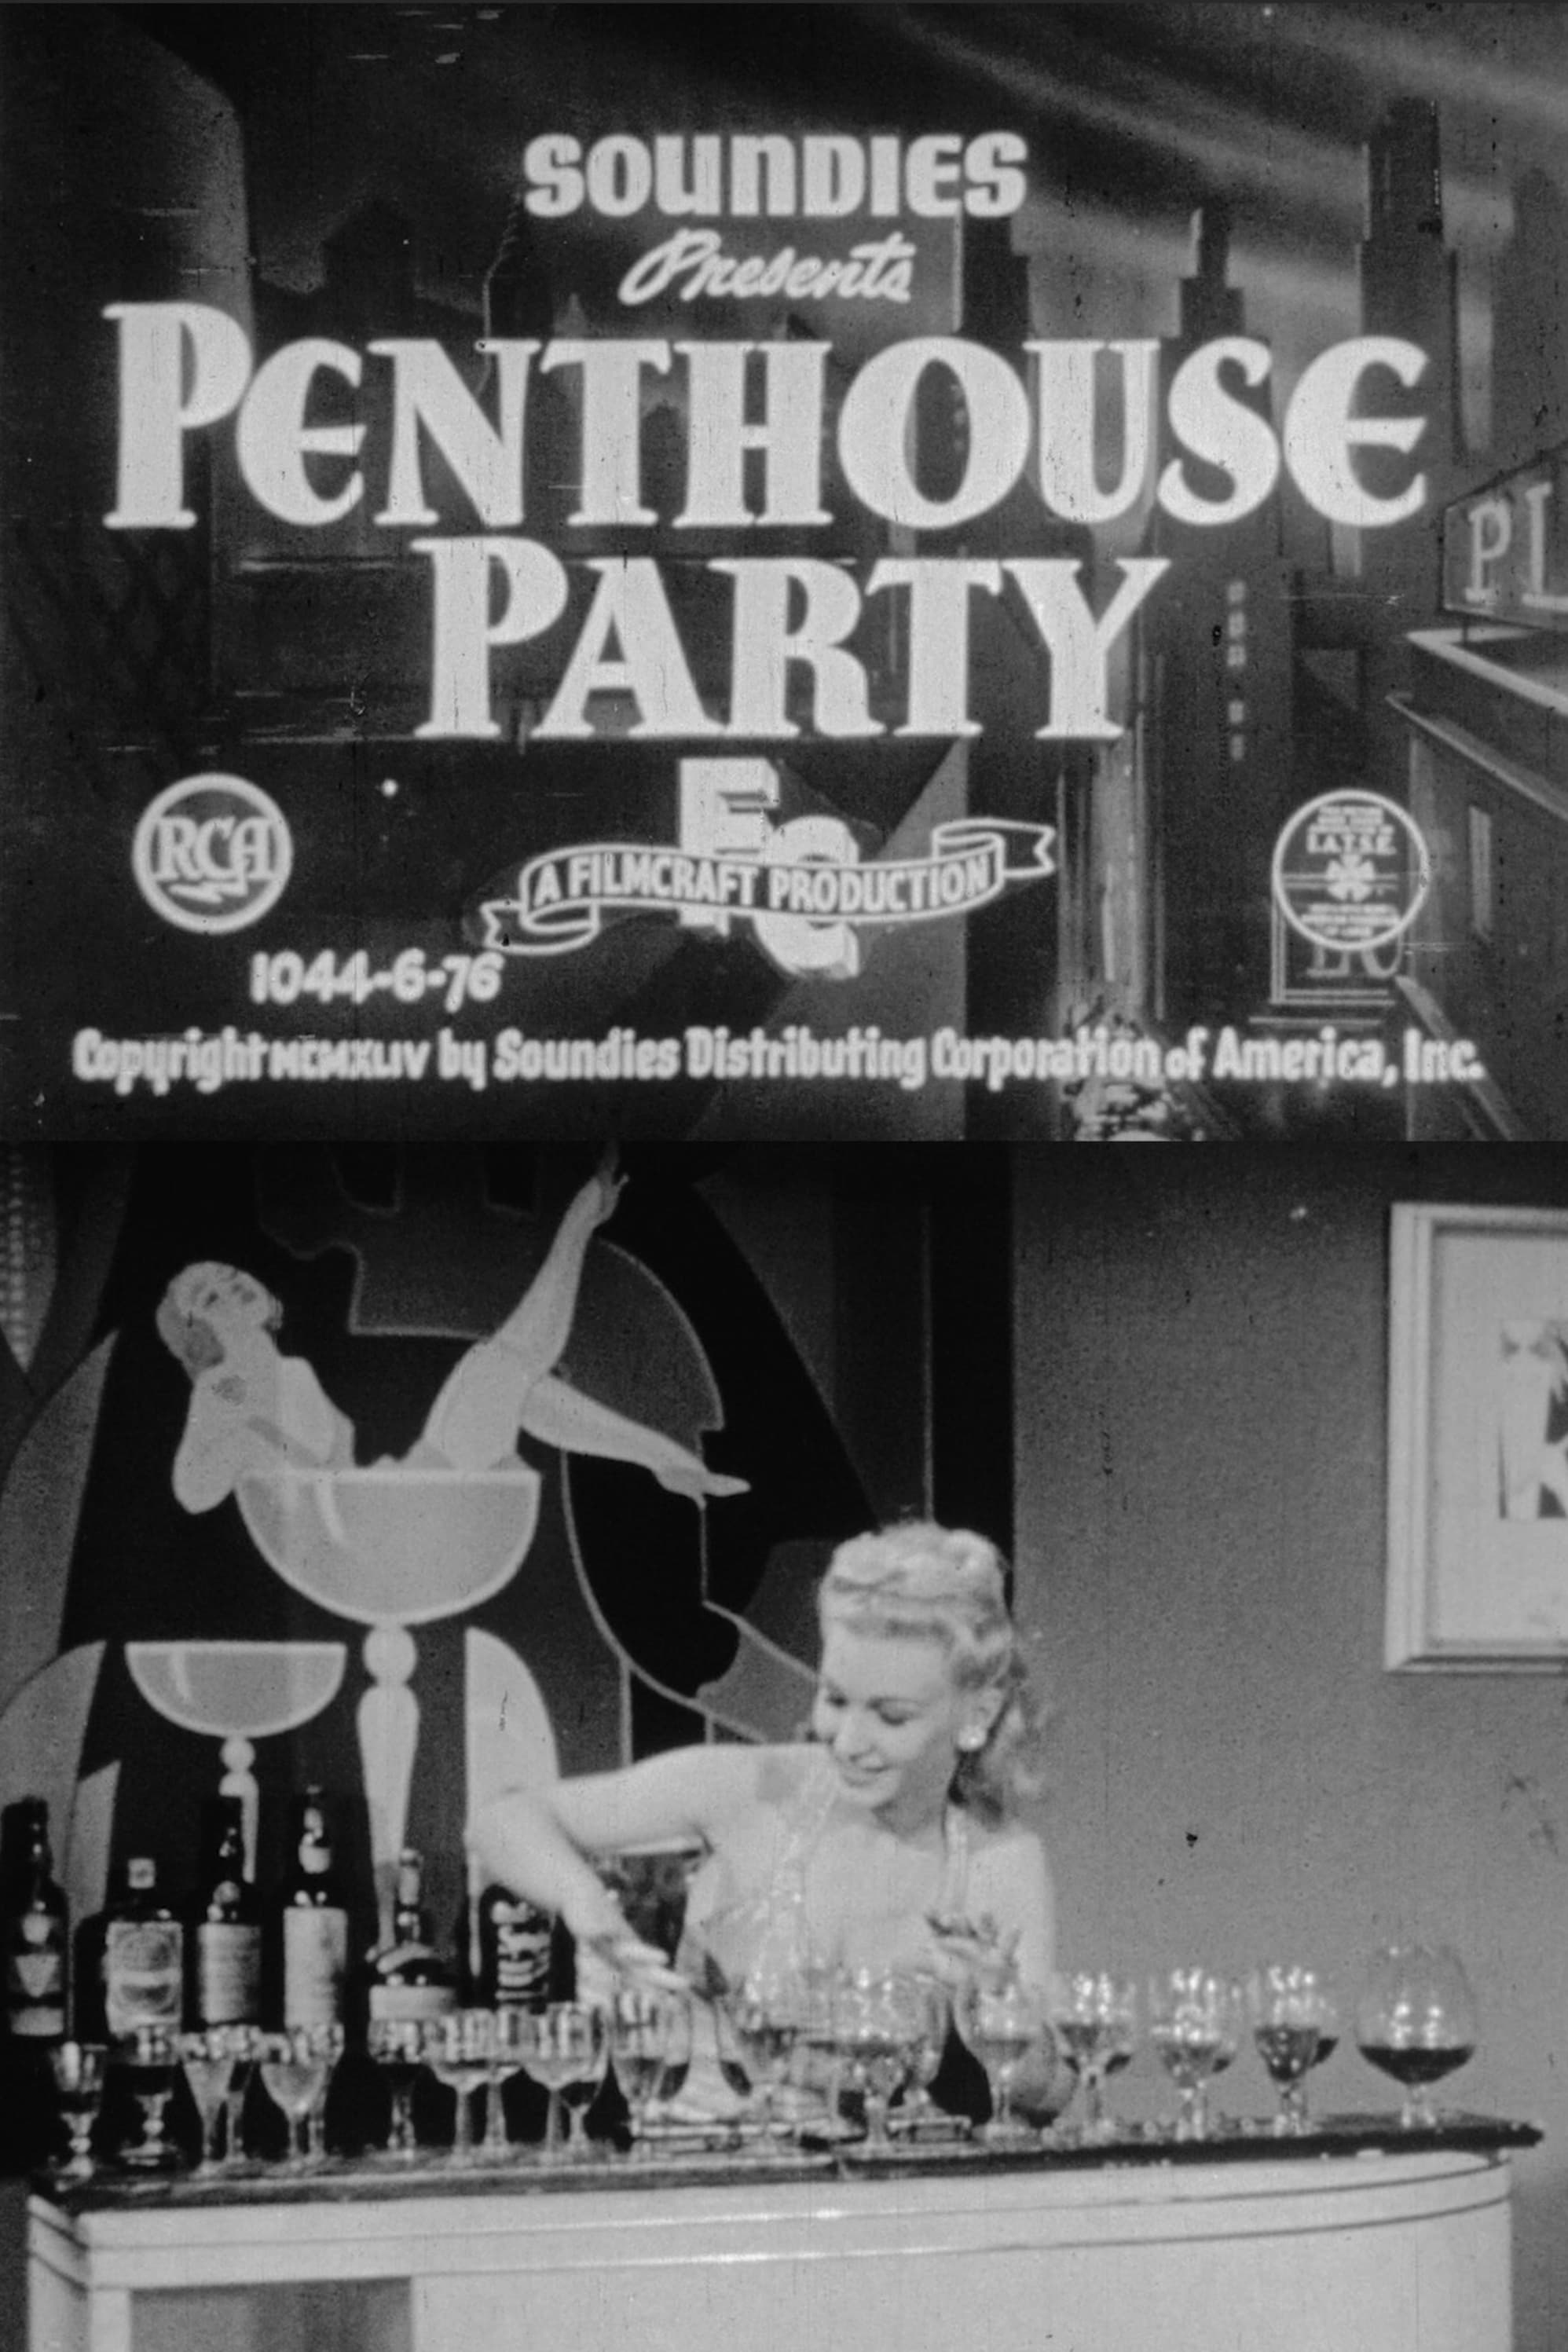 Penthouse Party